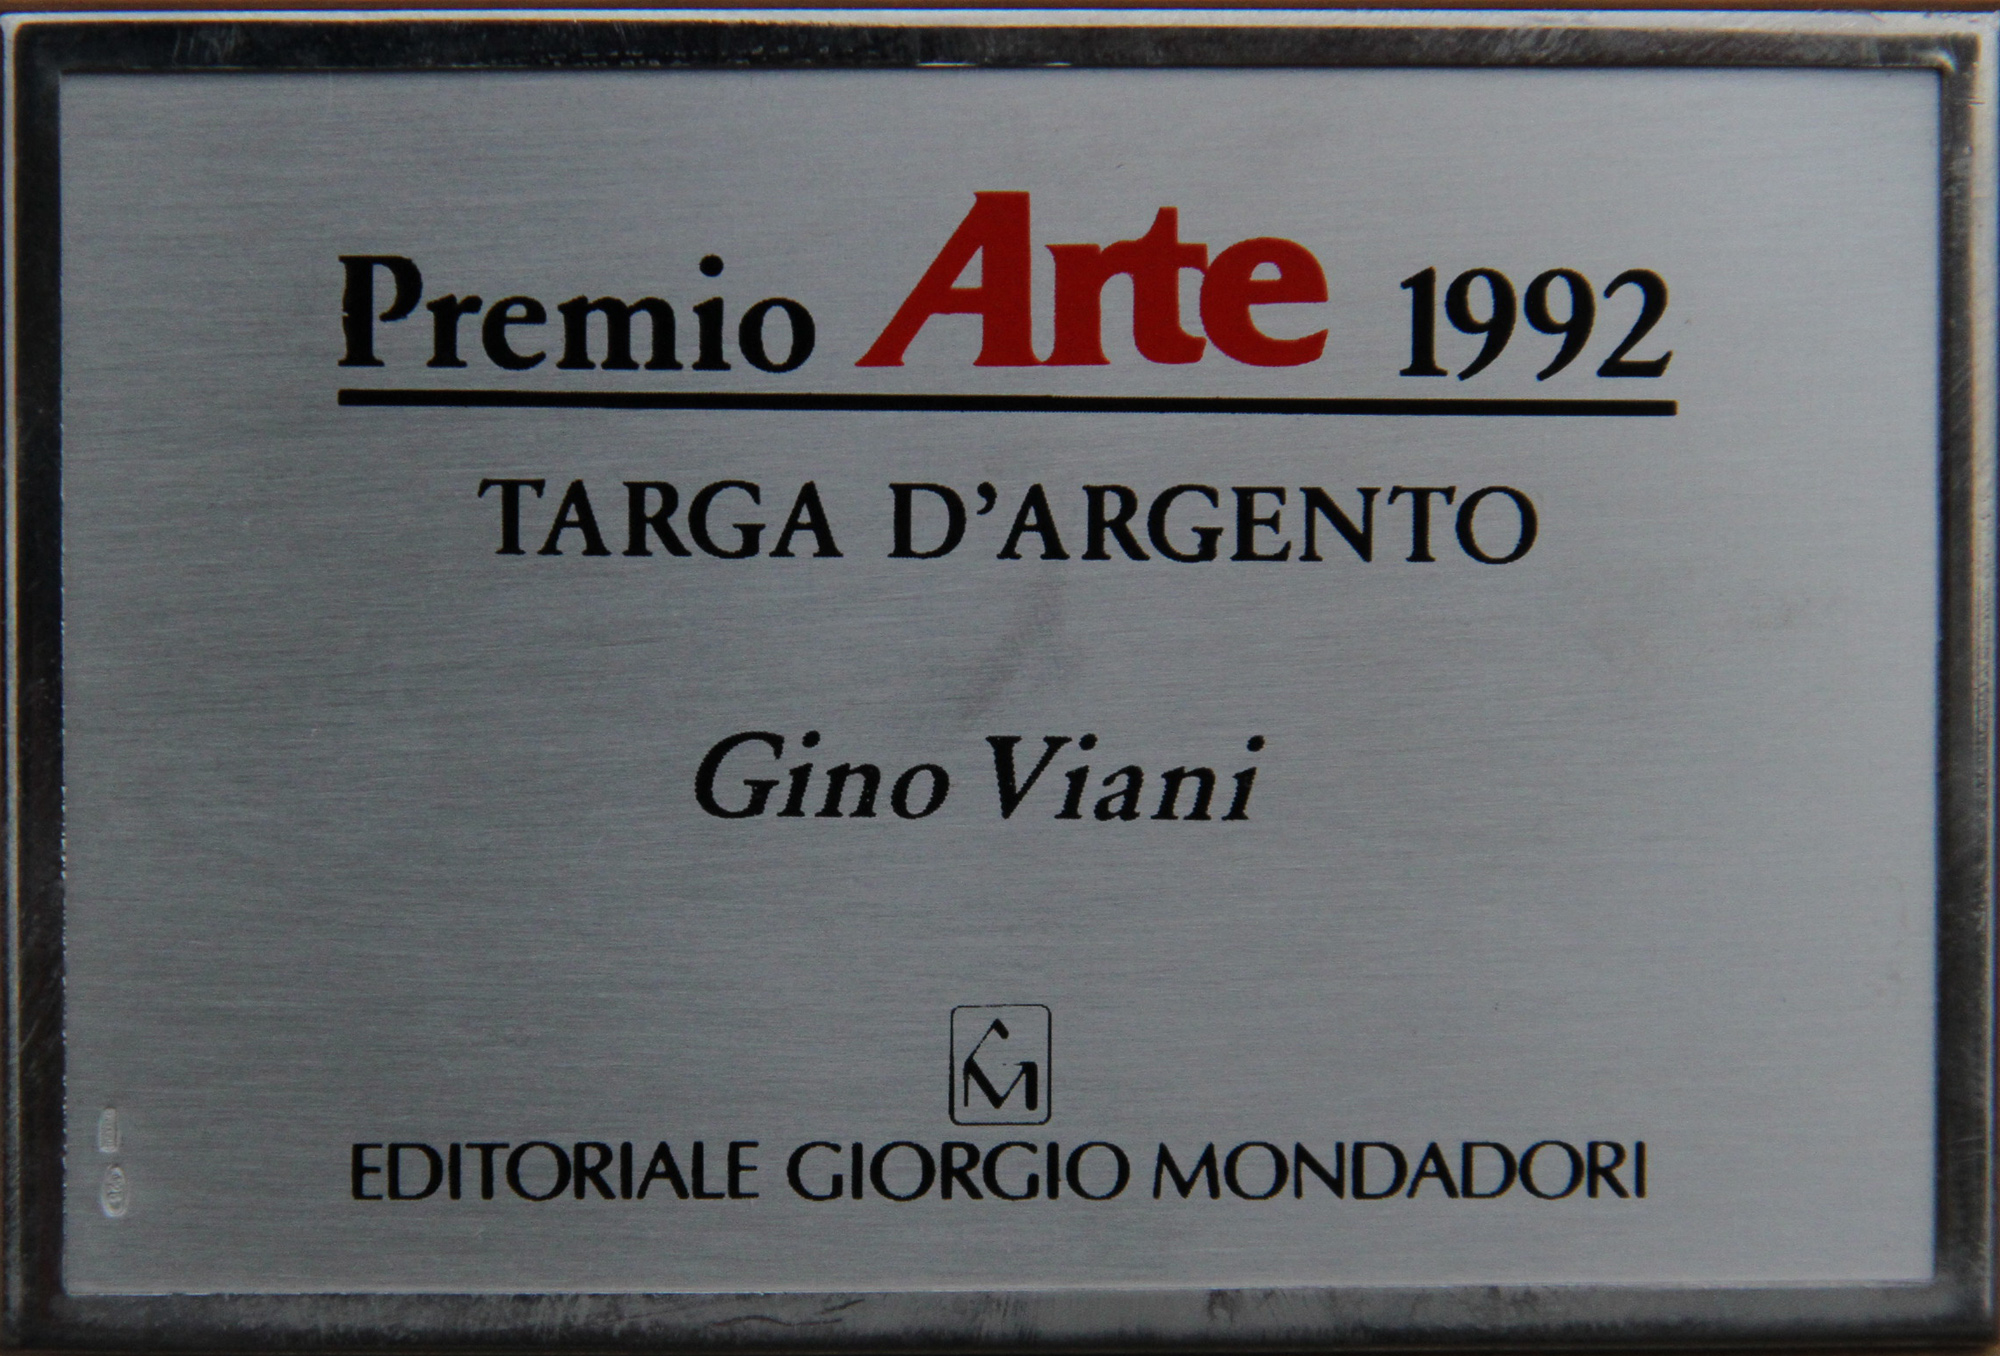 Premio Arte 1992